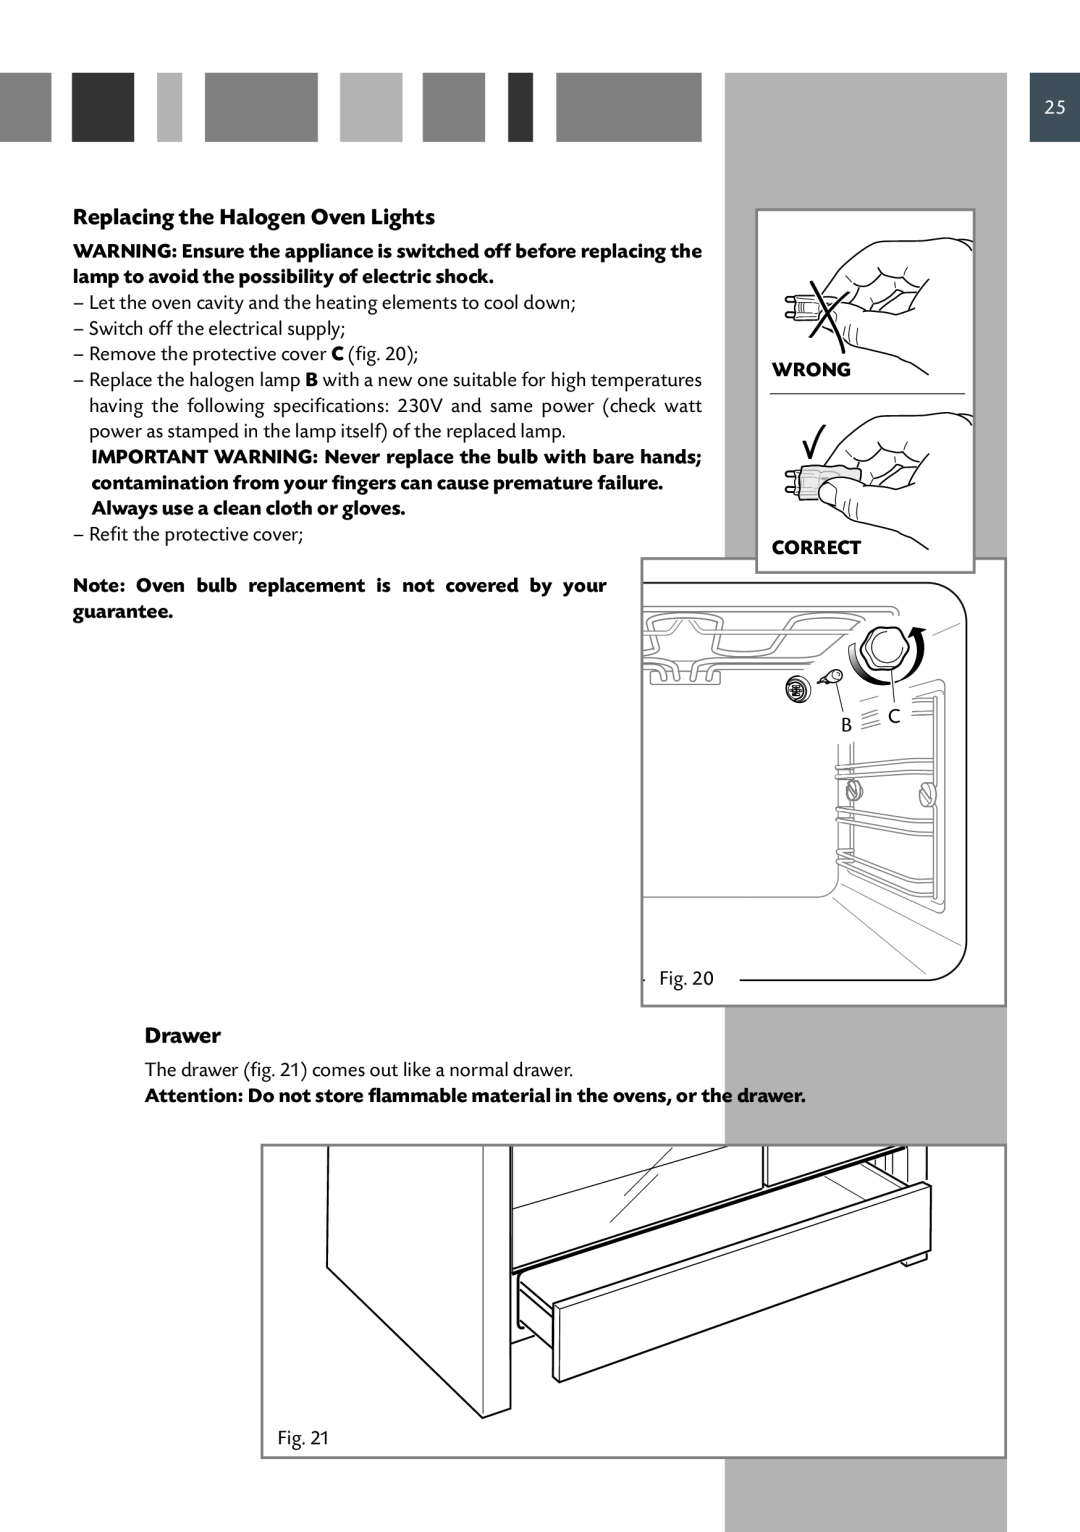 CDA RV 1060 manual Replacing the Halogen Oven Lights, Drawer 